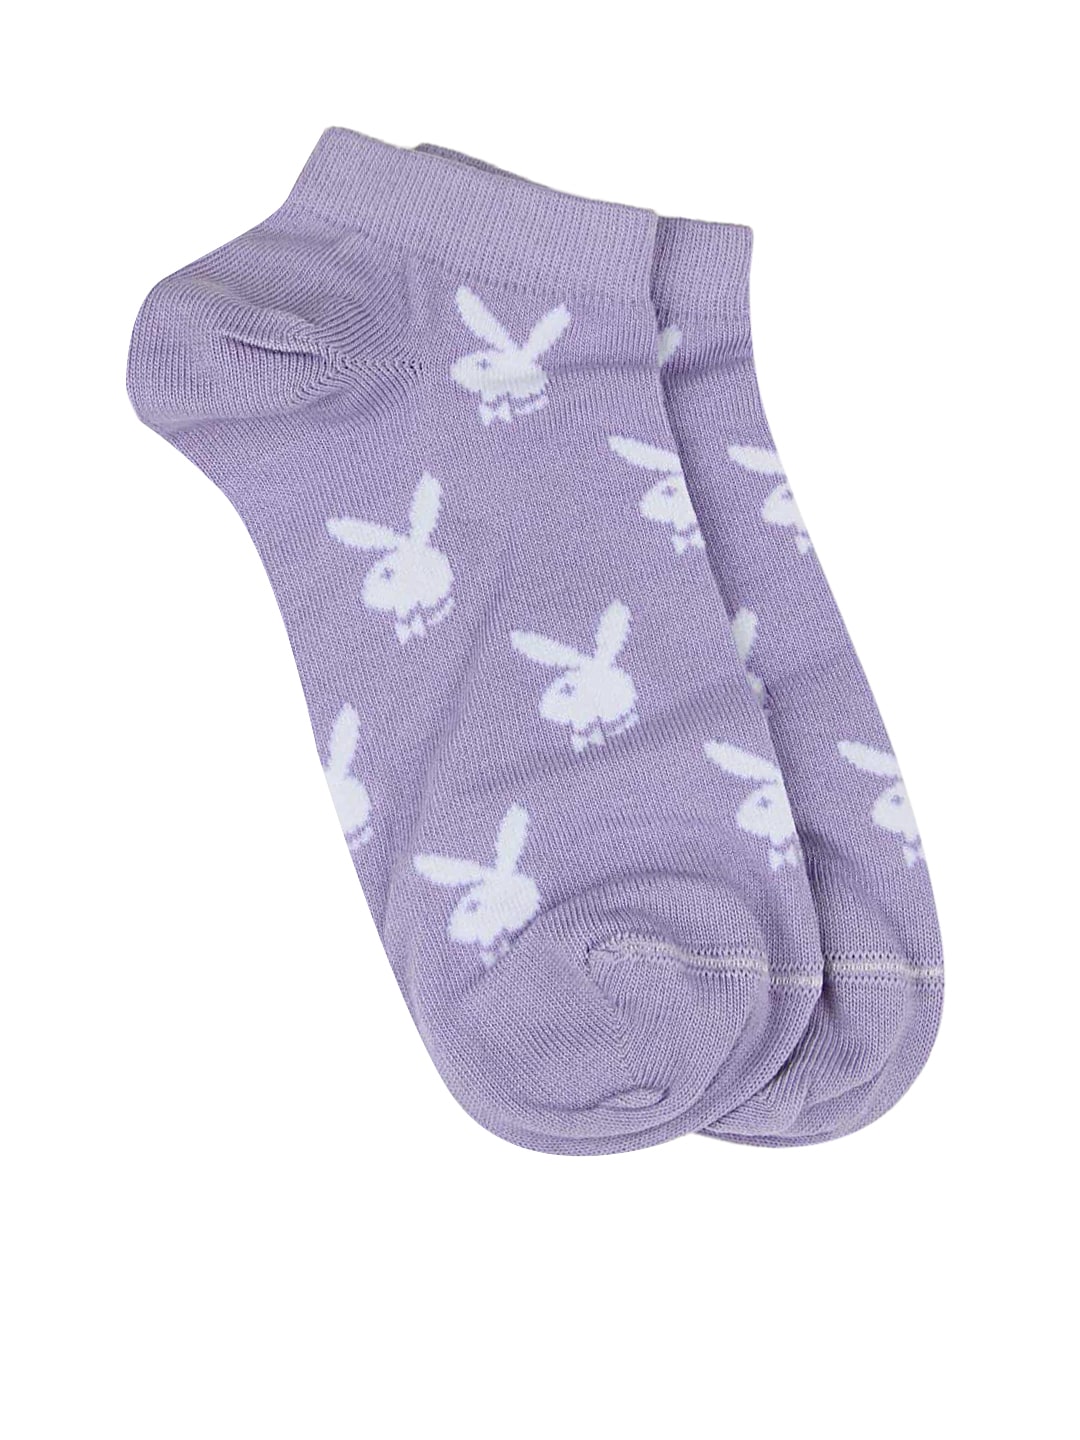 Playboy Women Lavender Socks